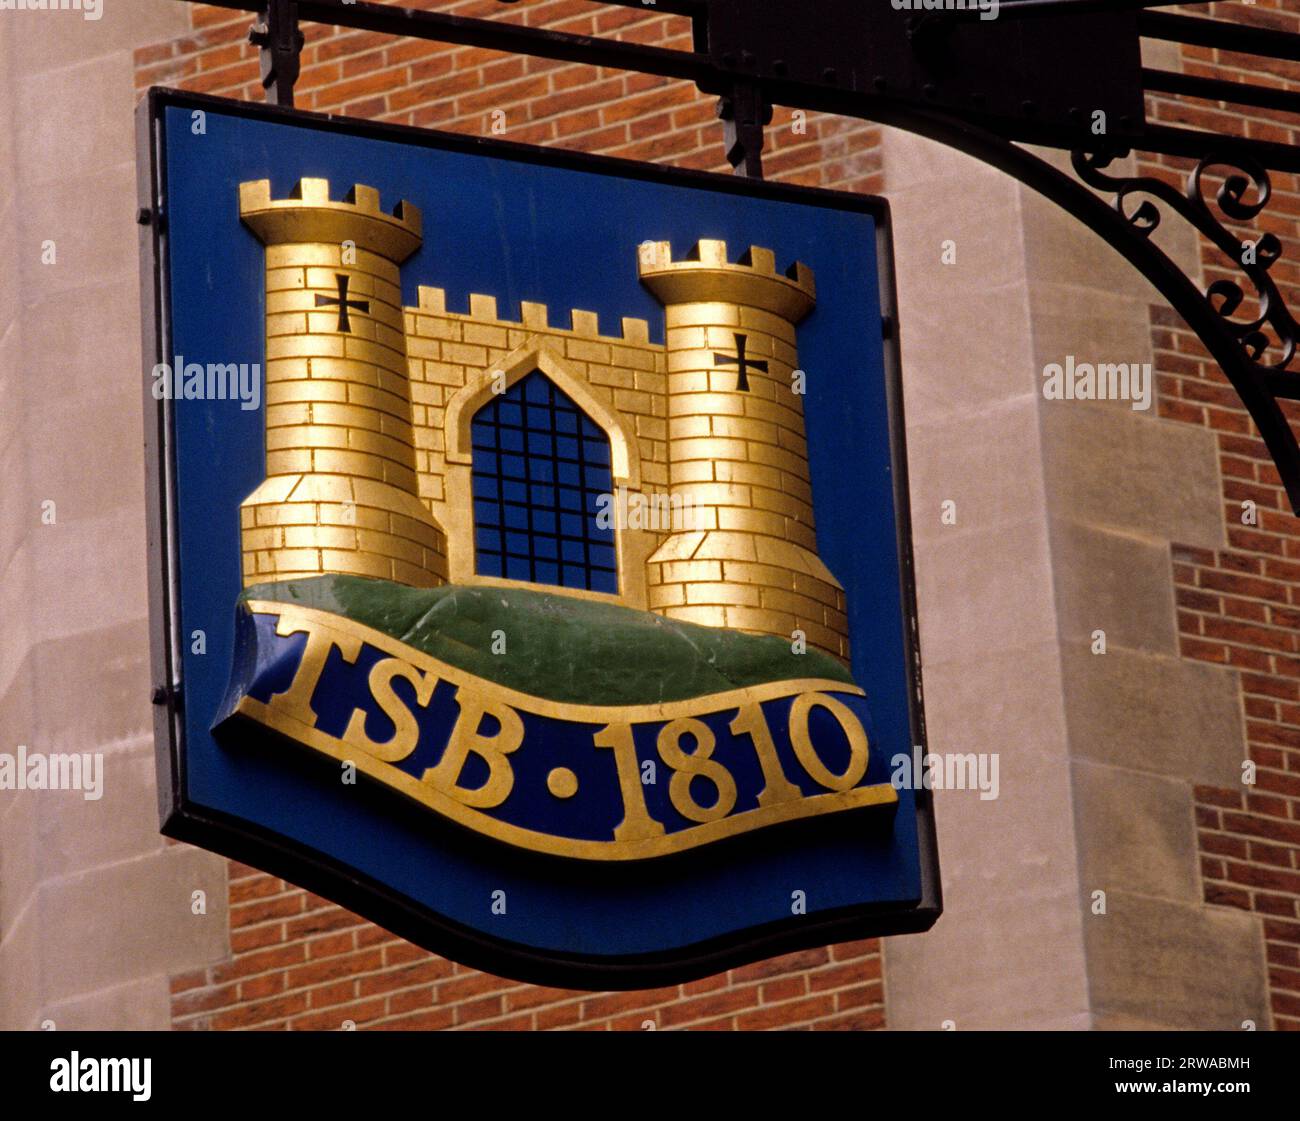 Lombard Street, City of London, TSB Bank, street sign, British banks, signs, England, UK Stock Photo